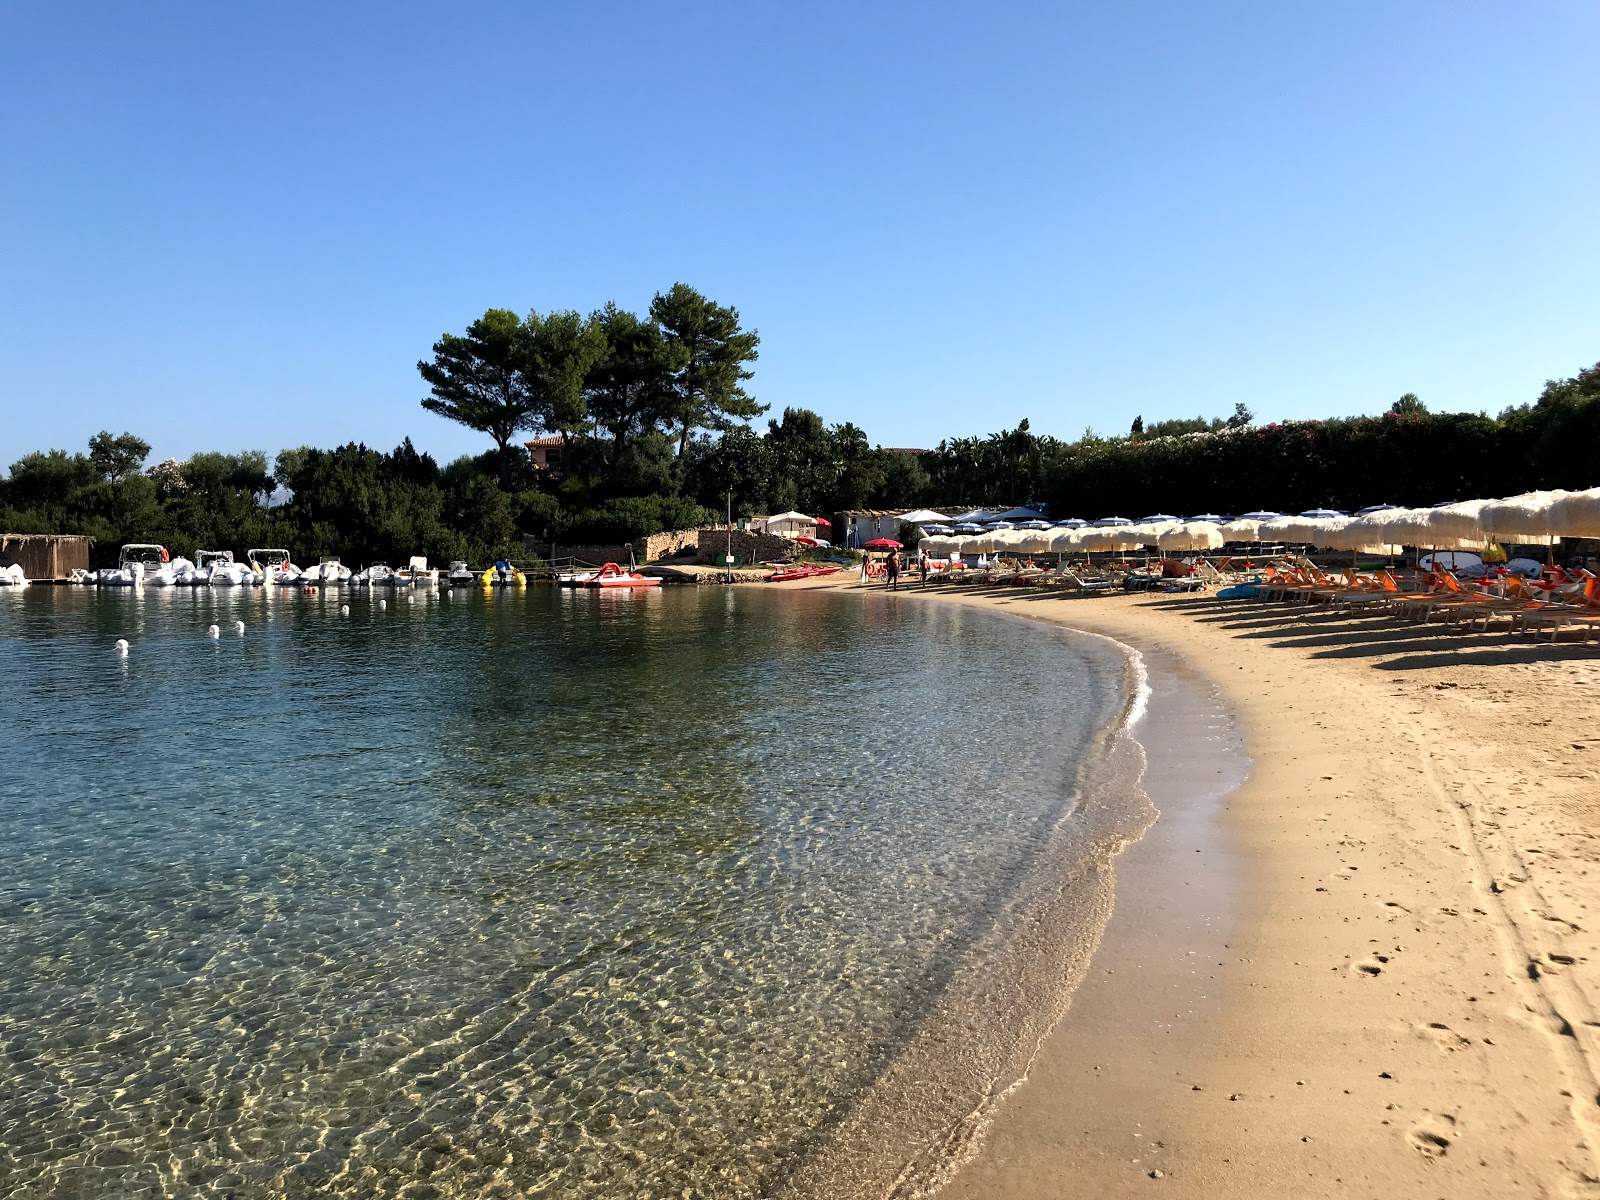 Foto de Spiaggia Rudargia com pequena baía